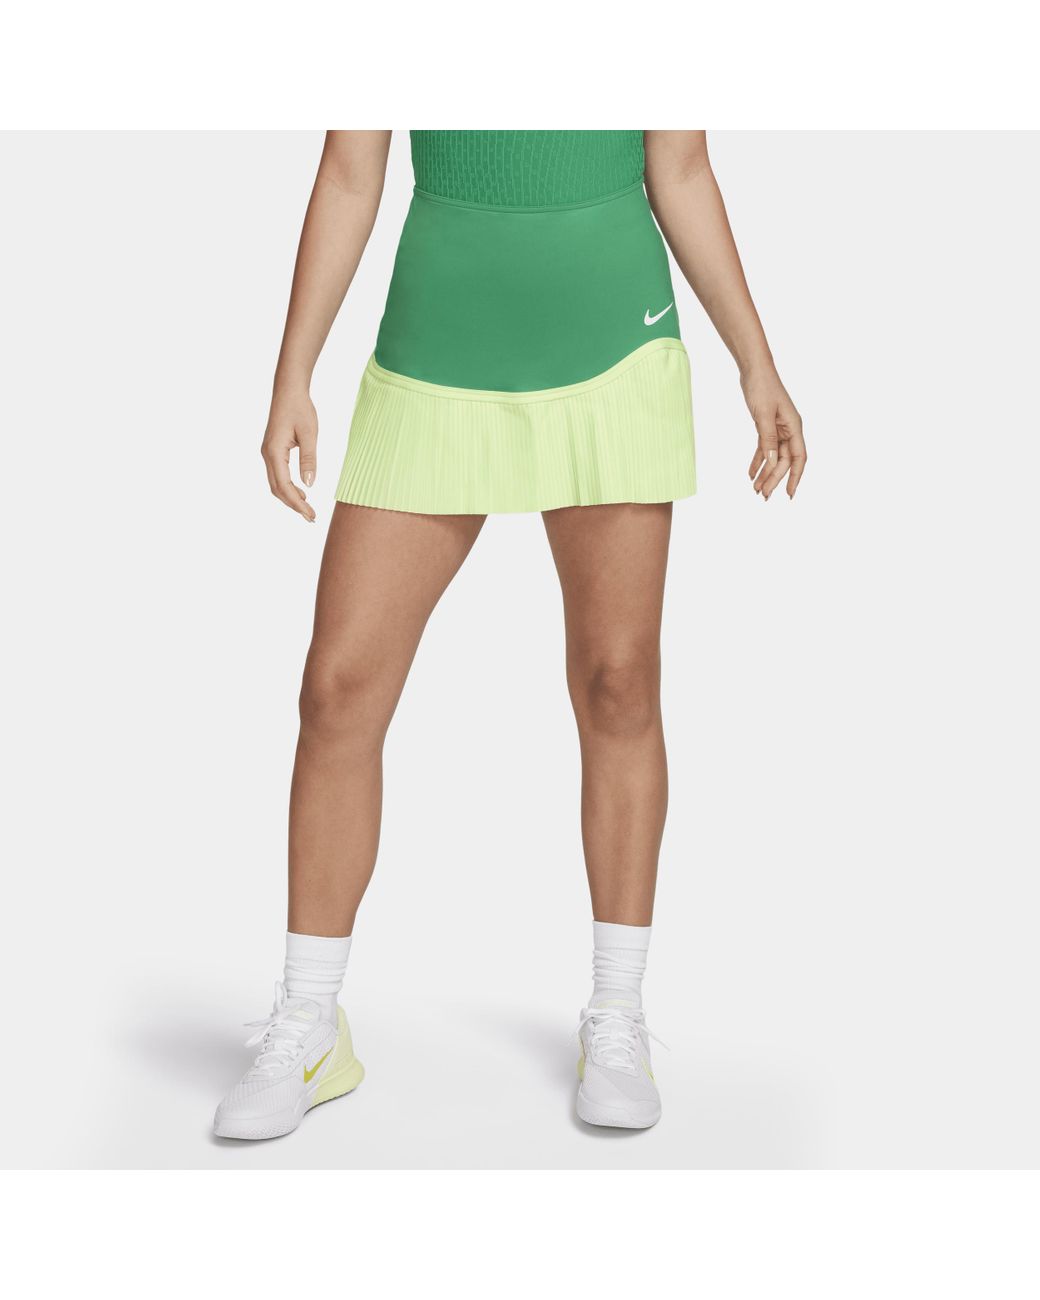 Nike Advantage Dri-fit Tennis Skirt Polyester in Green | Lyst UK